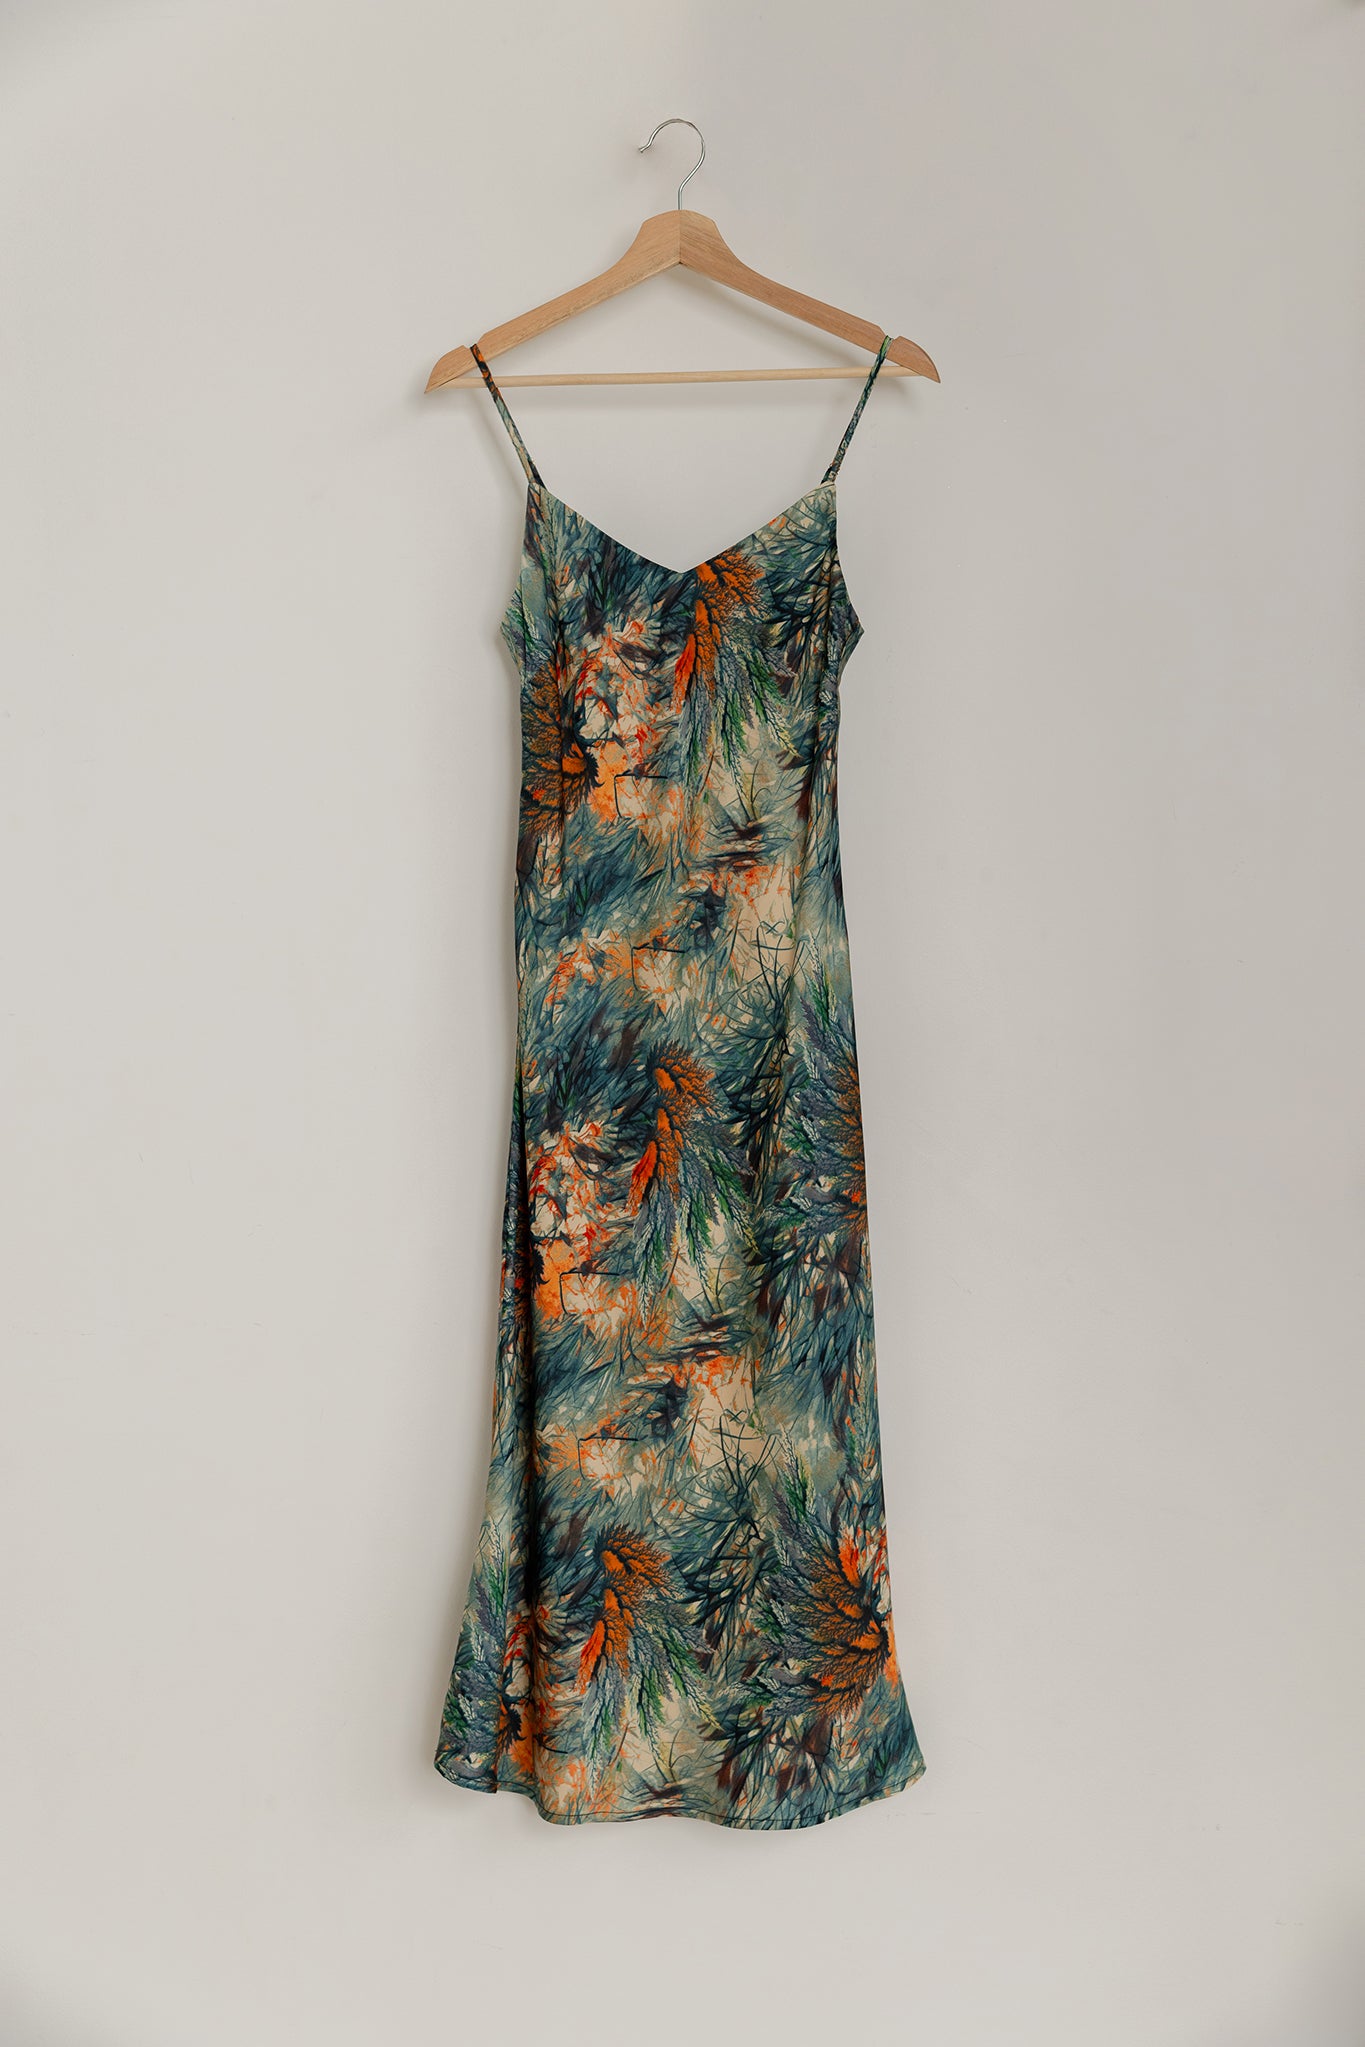 Demera Dress in Forest Print